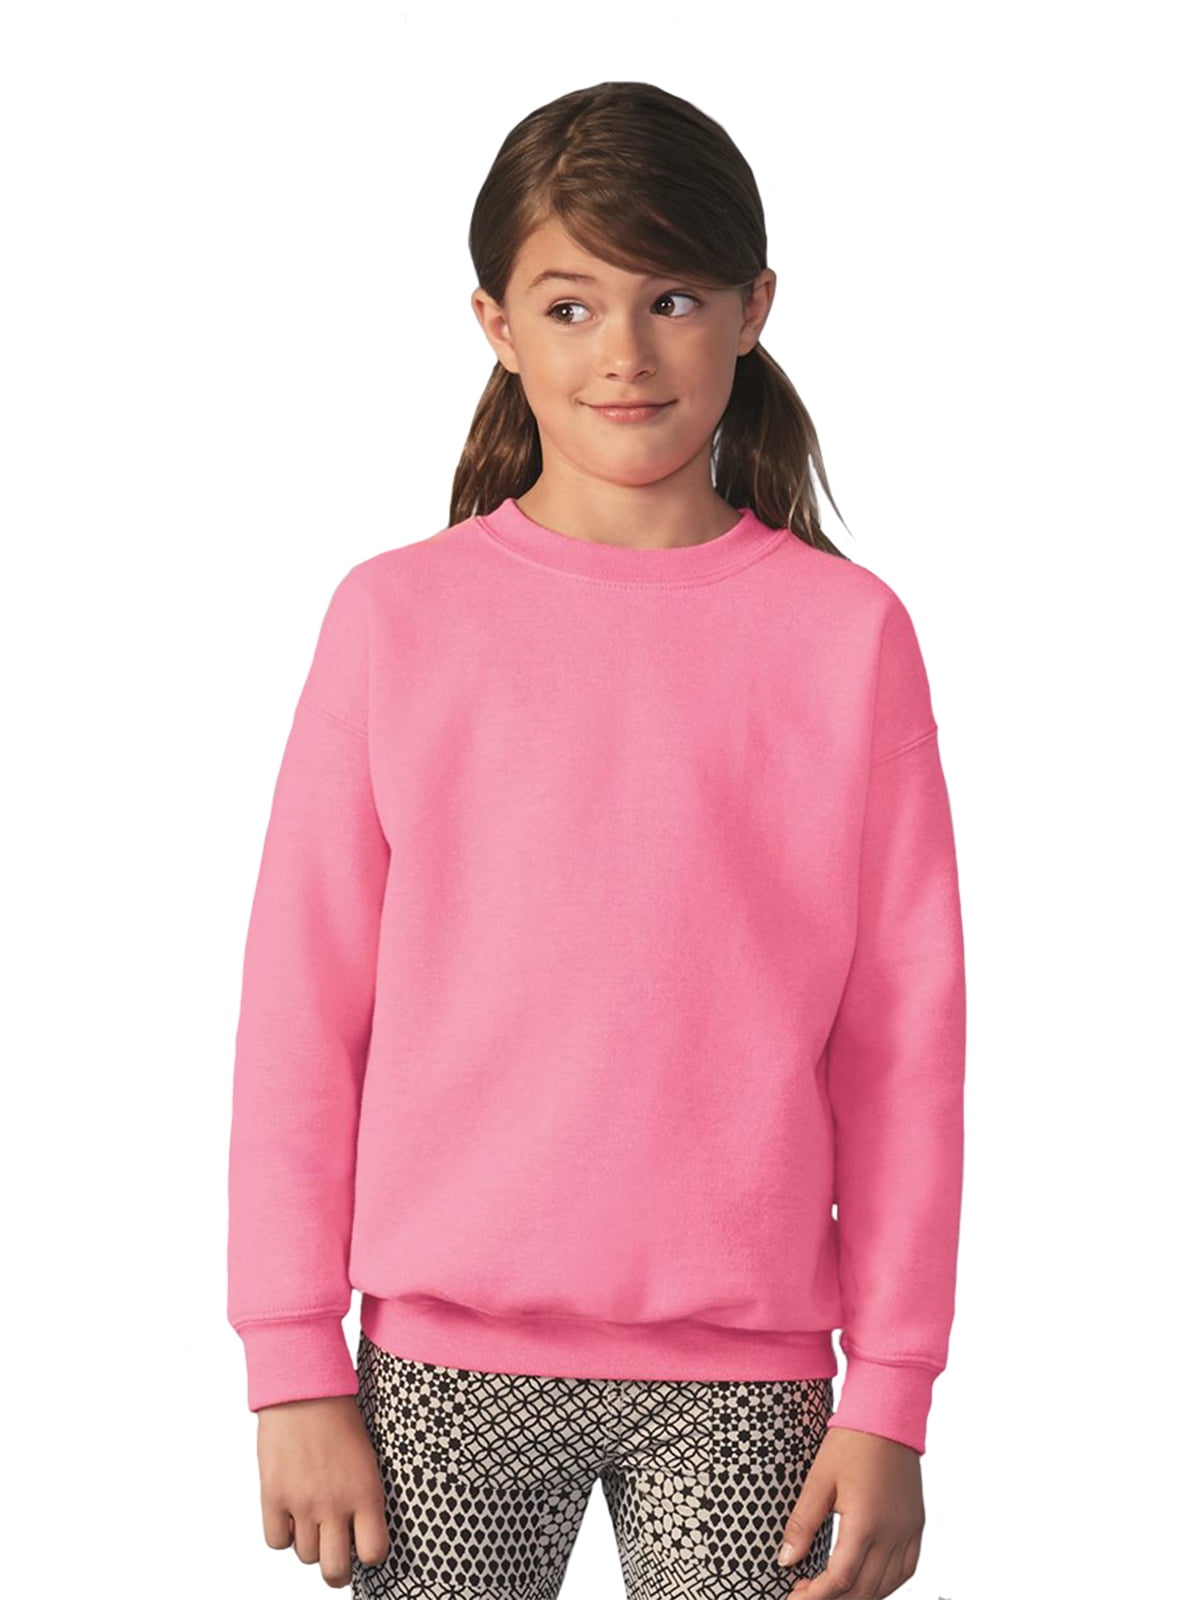 Unisex Kids Children School Uniform Plain Fleece Sweat Jumper Pullover 